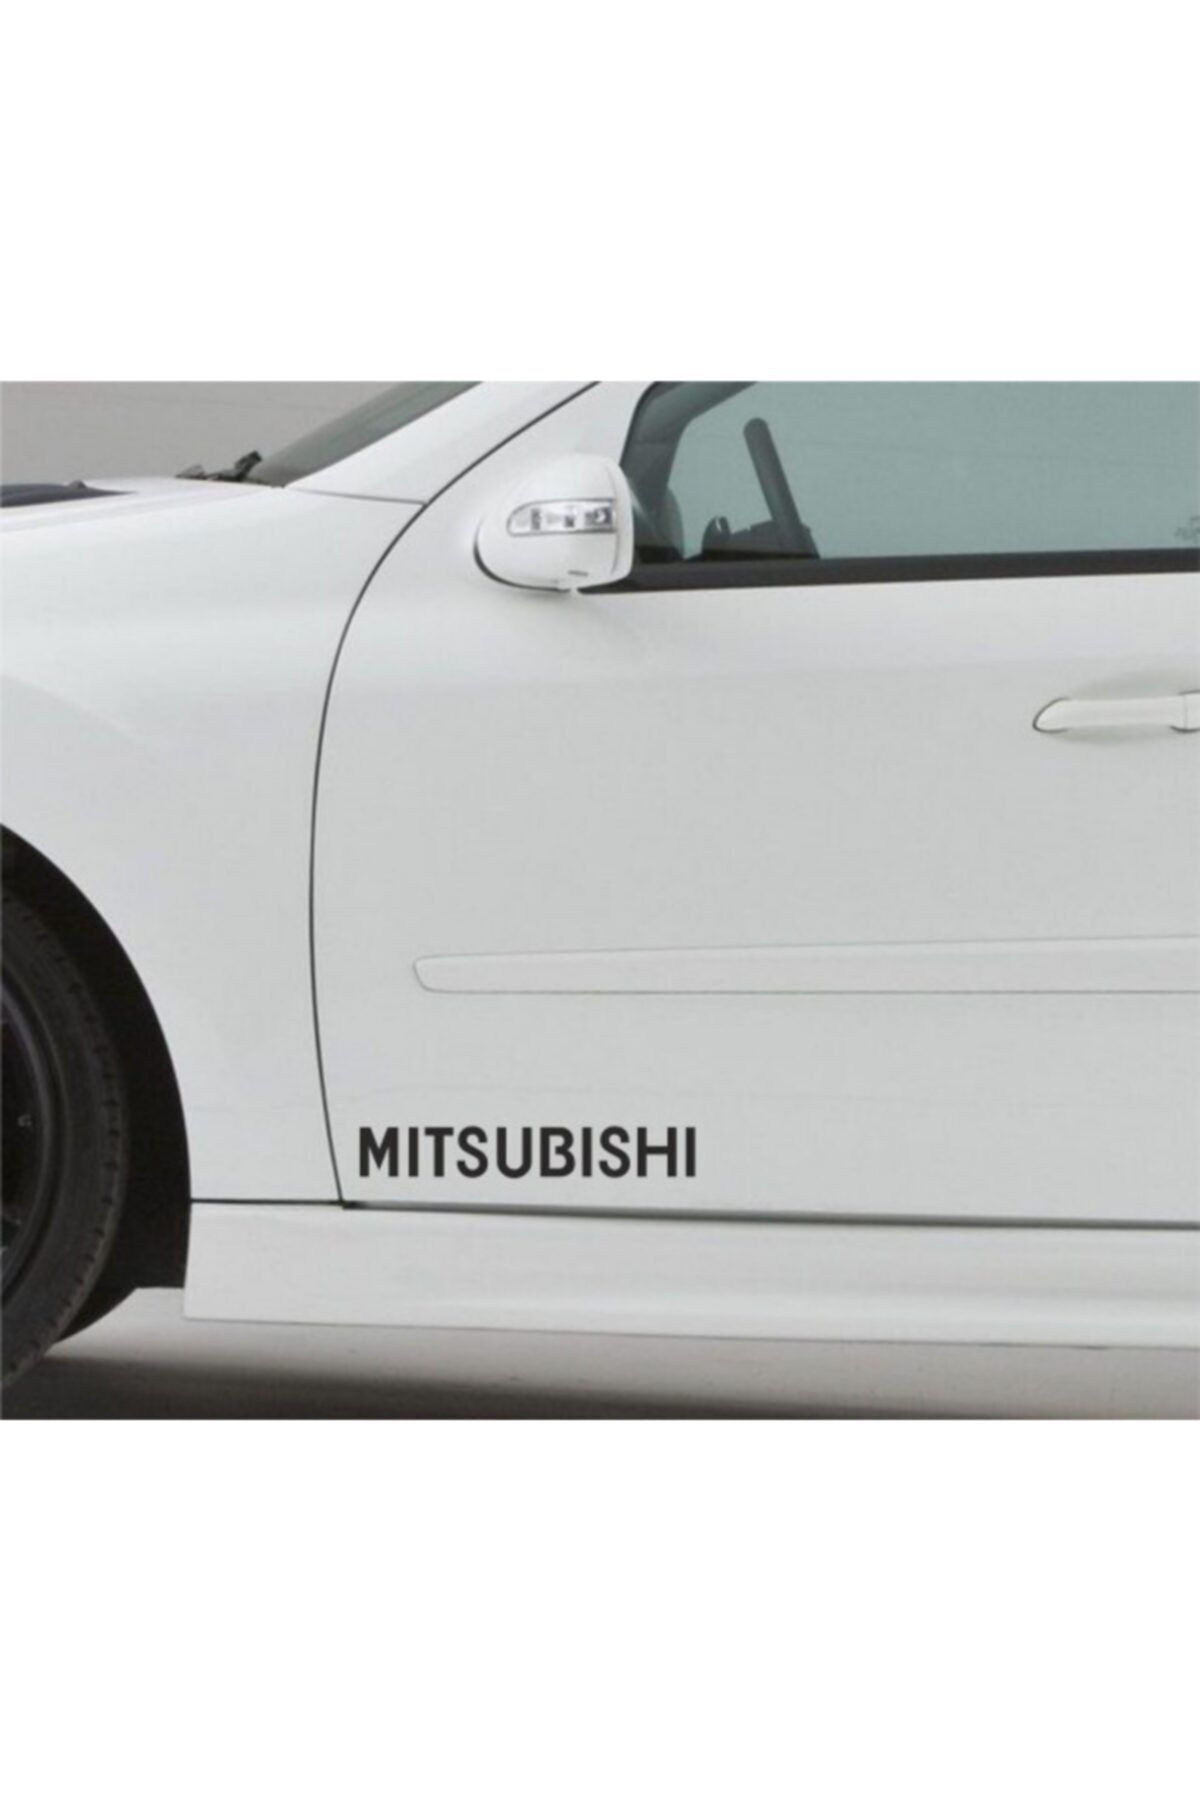 TSC Mitsubishi Araba Sticker Yapıştırma 2 ADET